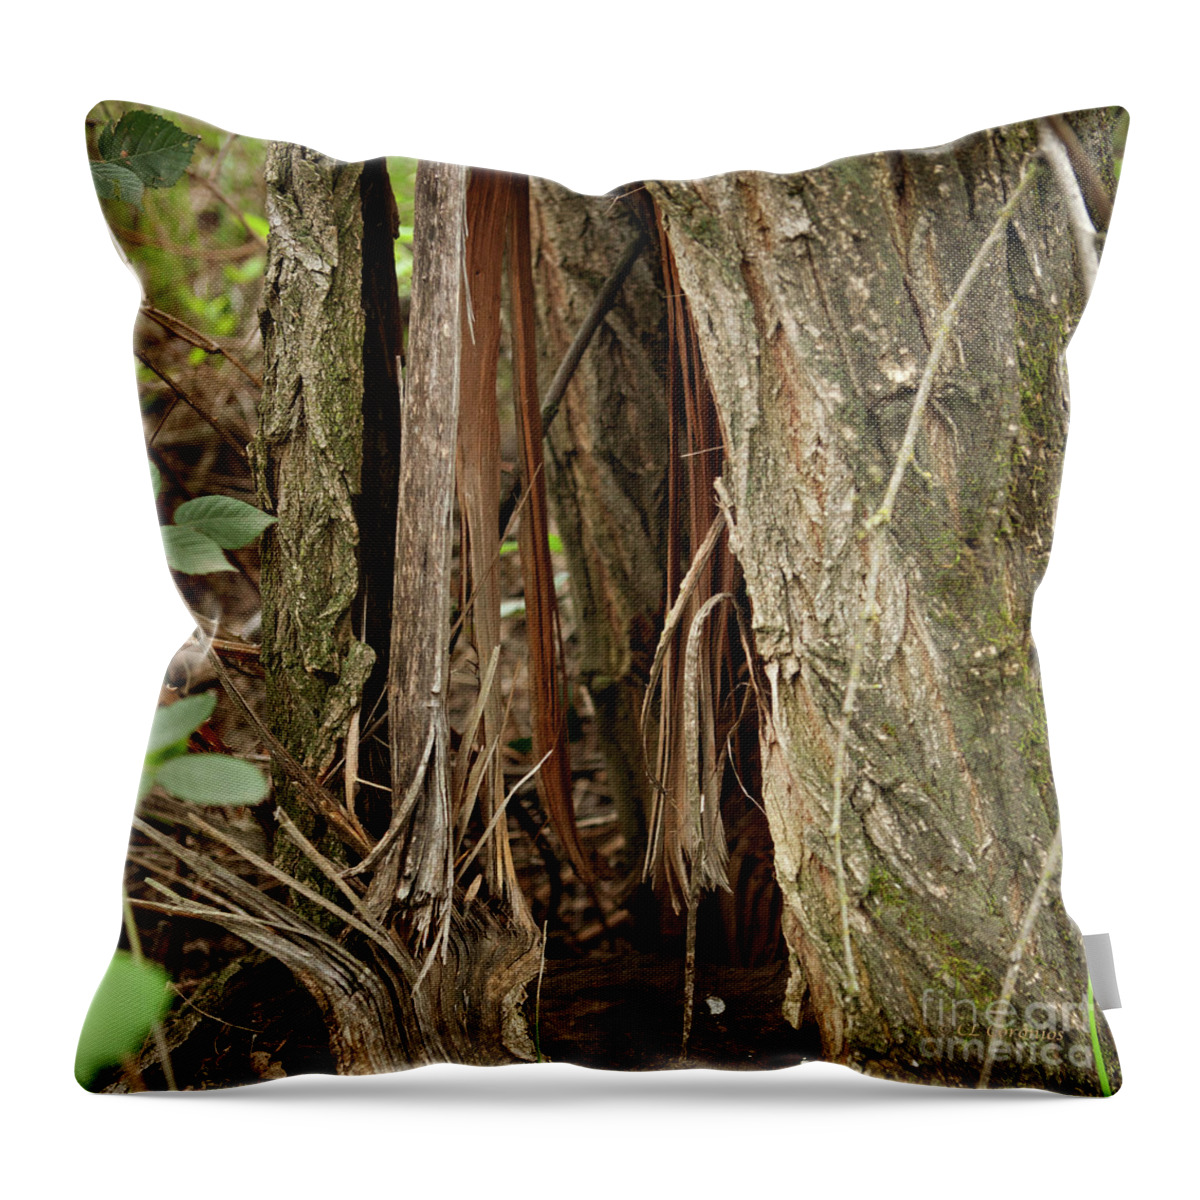 Anderson River Park Throw Pillow featuring the photograph Shredded Tree by Carol Lynn Coronios